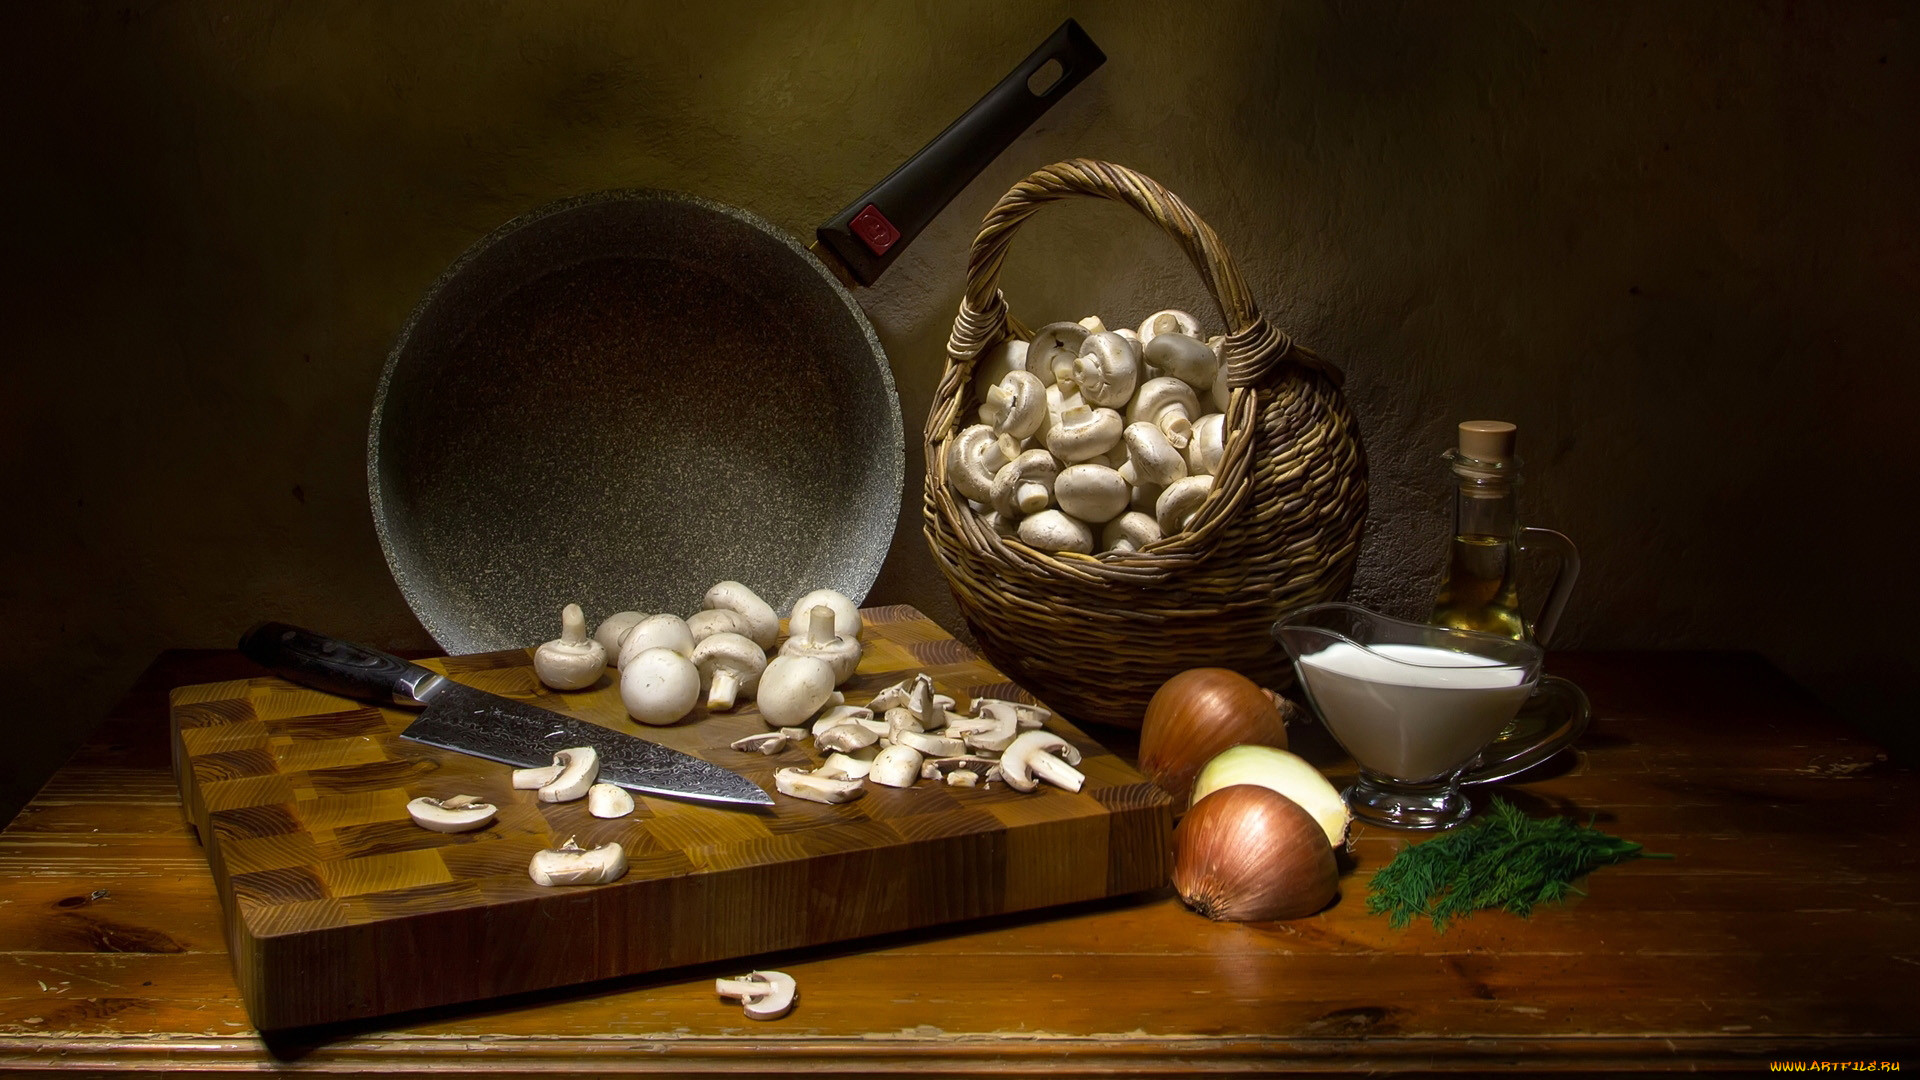 General 1920x1080 food still life mushroom knife Pan (Cooking) baskets onion olive oil cutting board